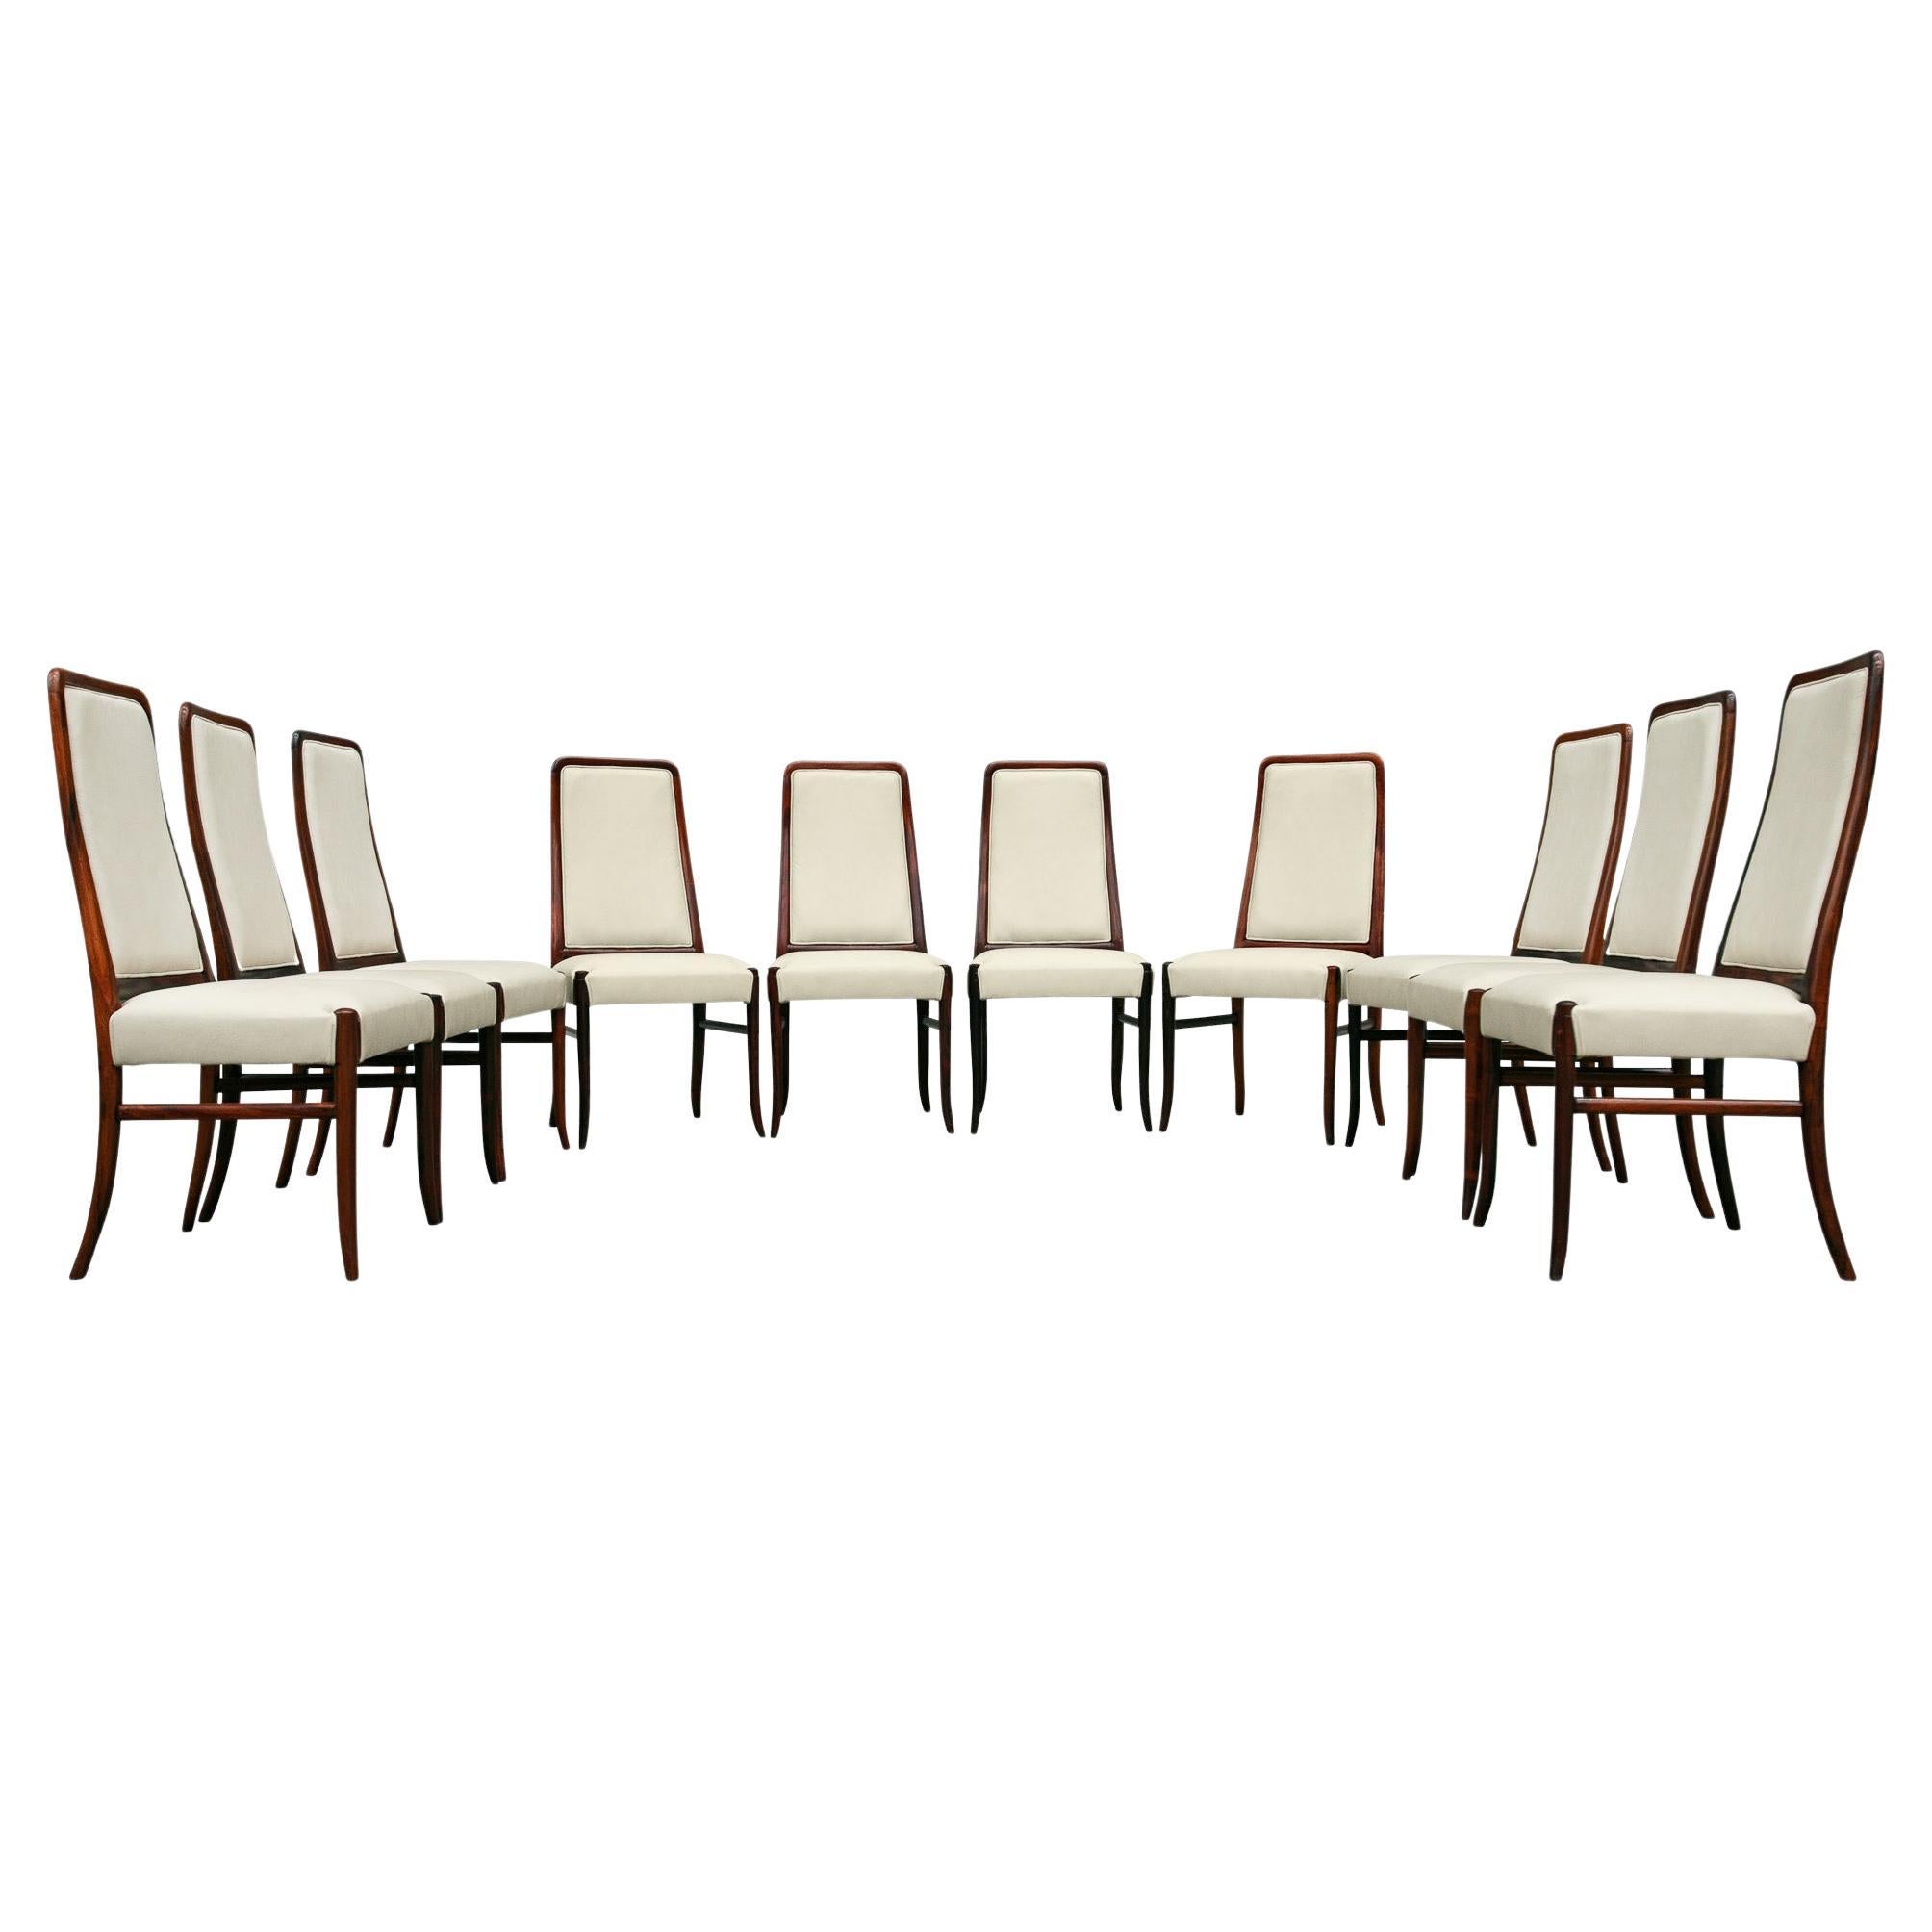 Brazilian Modern 10 Chair Set in Hardwood & Beige Leather Joaquim Tenreiro 1960s For Sale